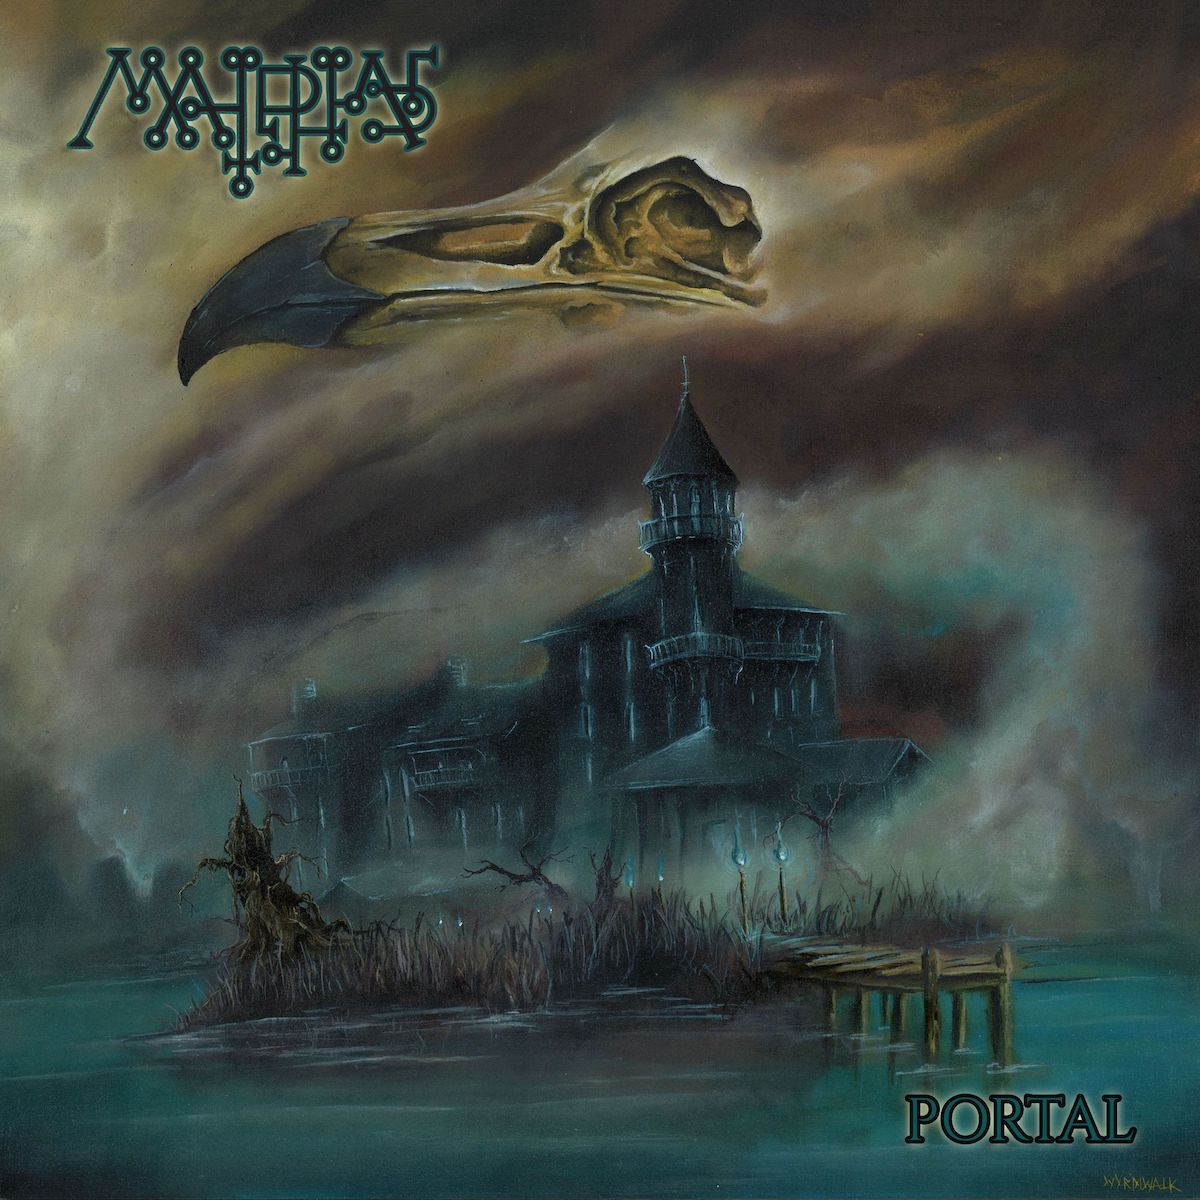 ALBUM REVIEW: Portal by Malphas